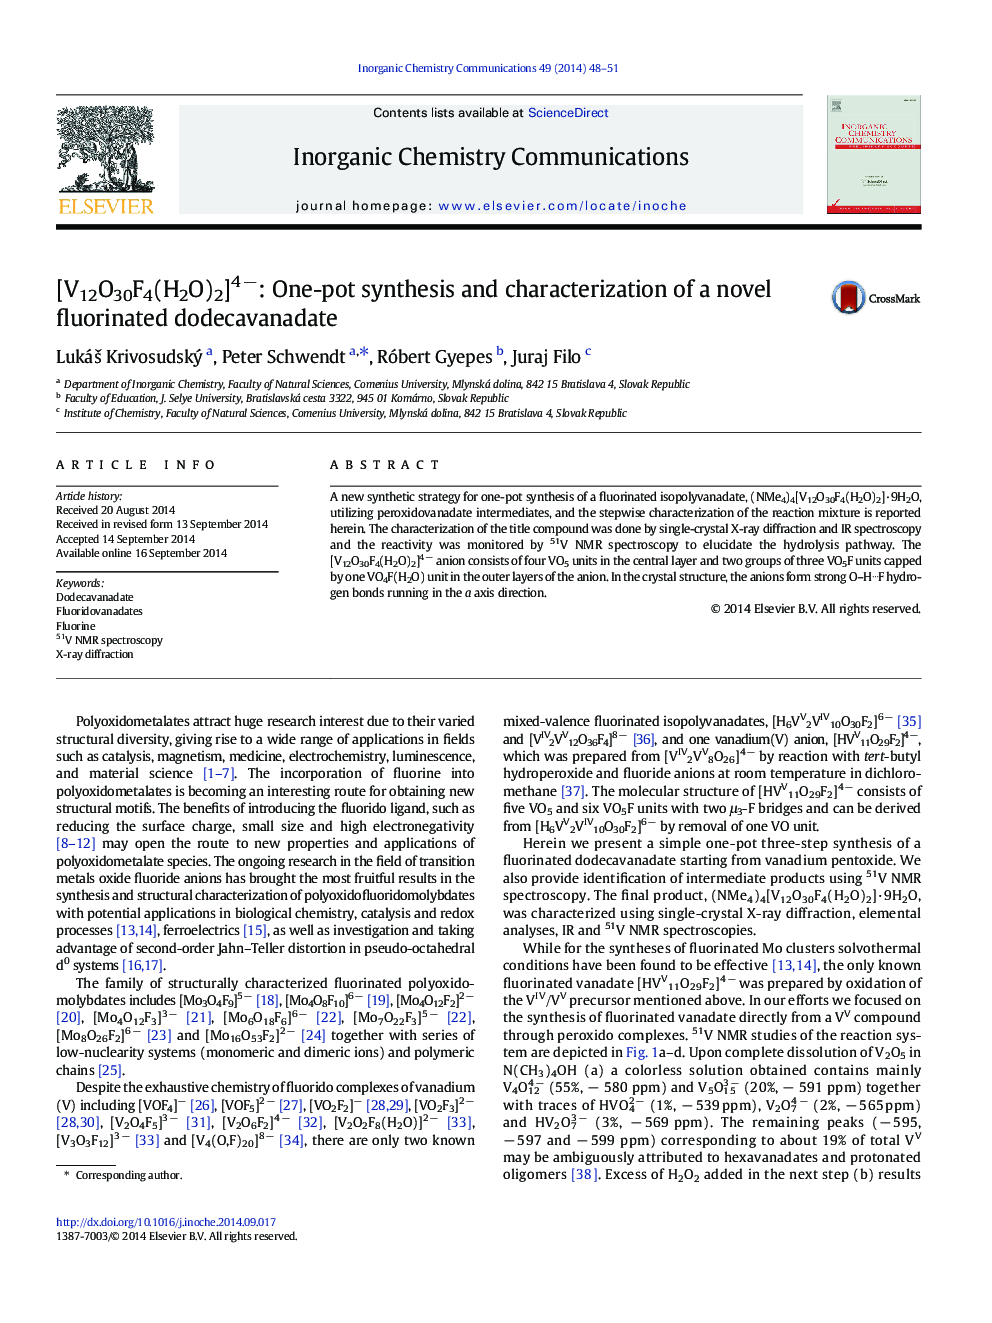 [V12O30F4(H2O)2]4Â â: One-pot synthesis and characterization of a novel fluorinated dodecavanadate